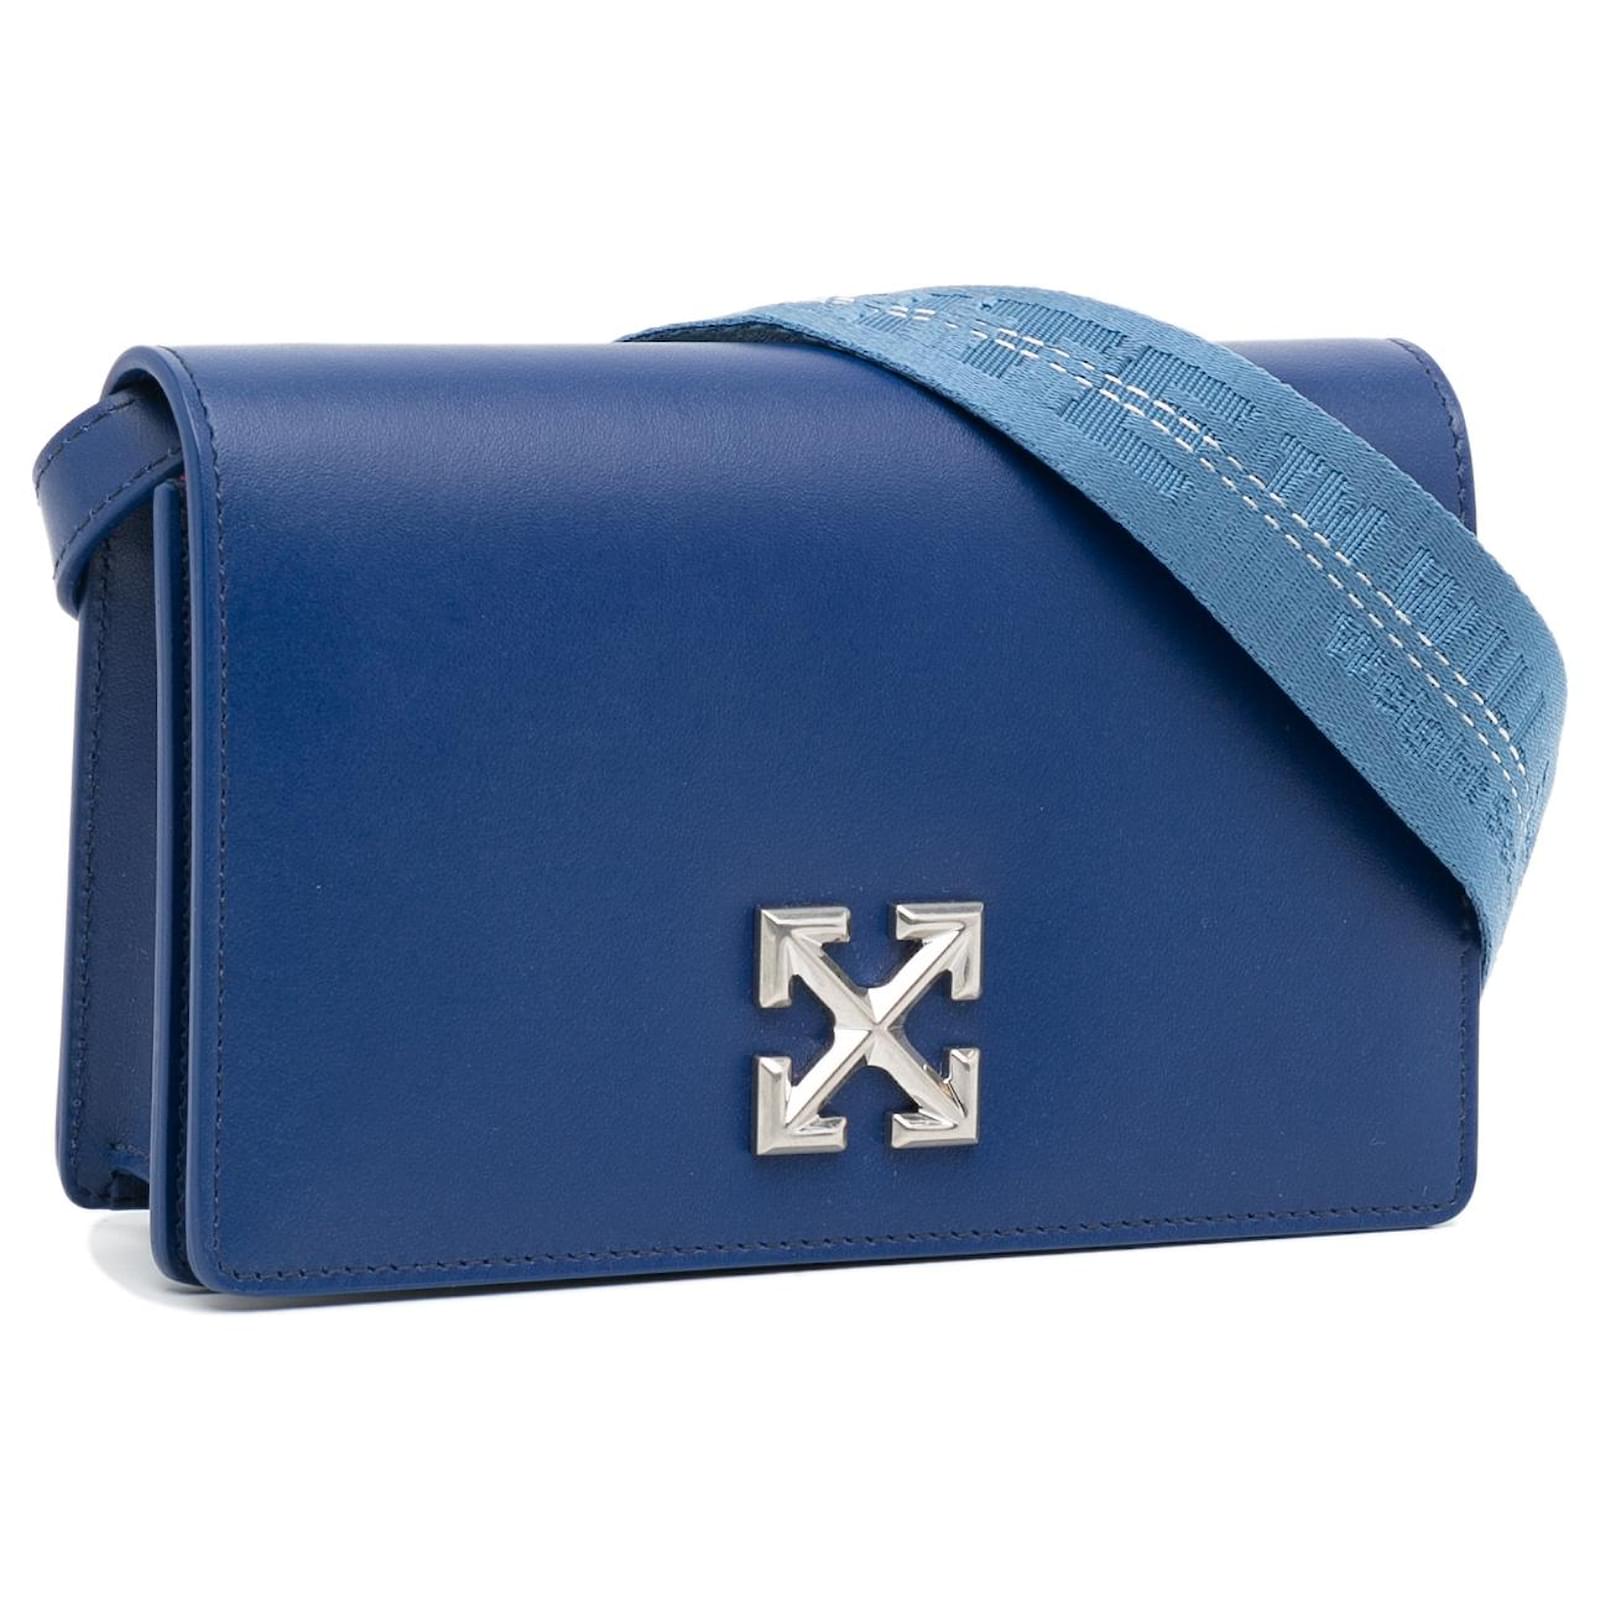 Jitney Leather Shoulder Bag in Blue - Off White